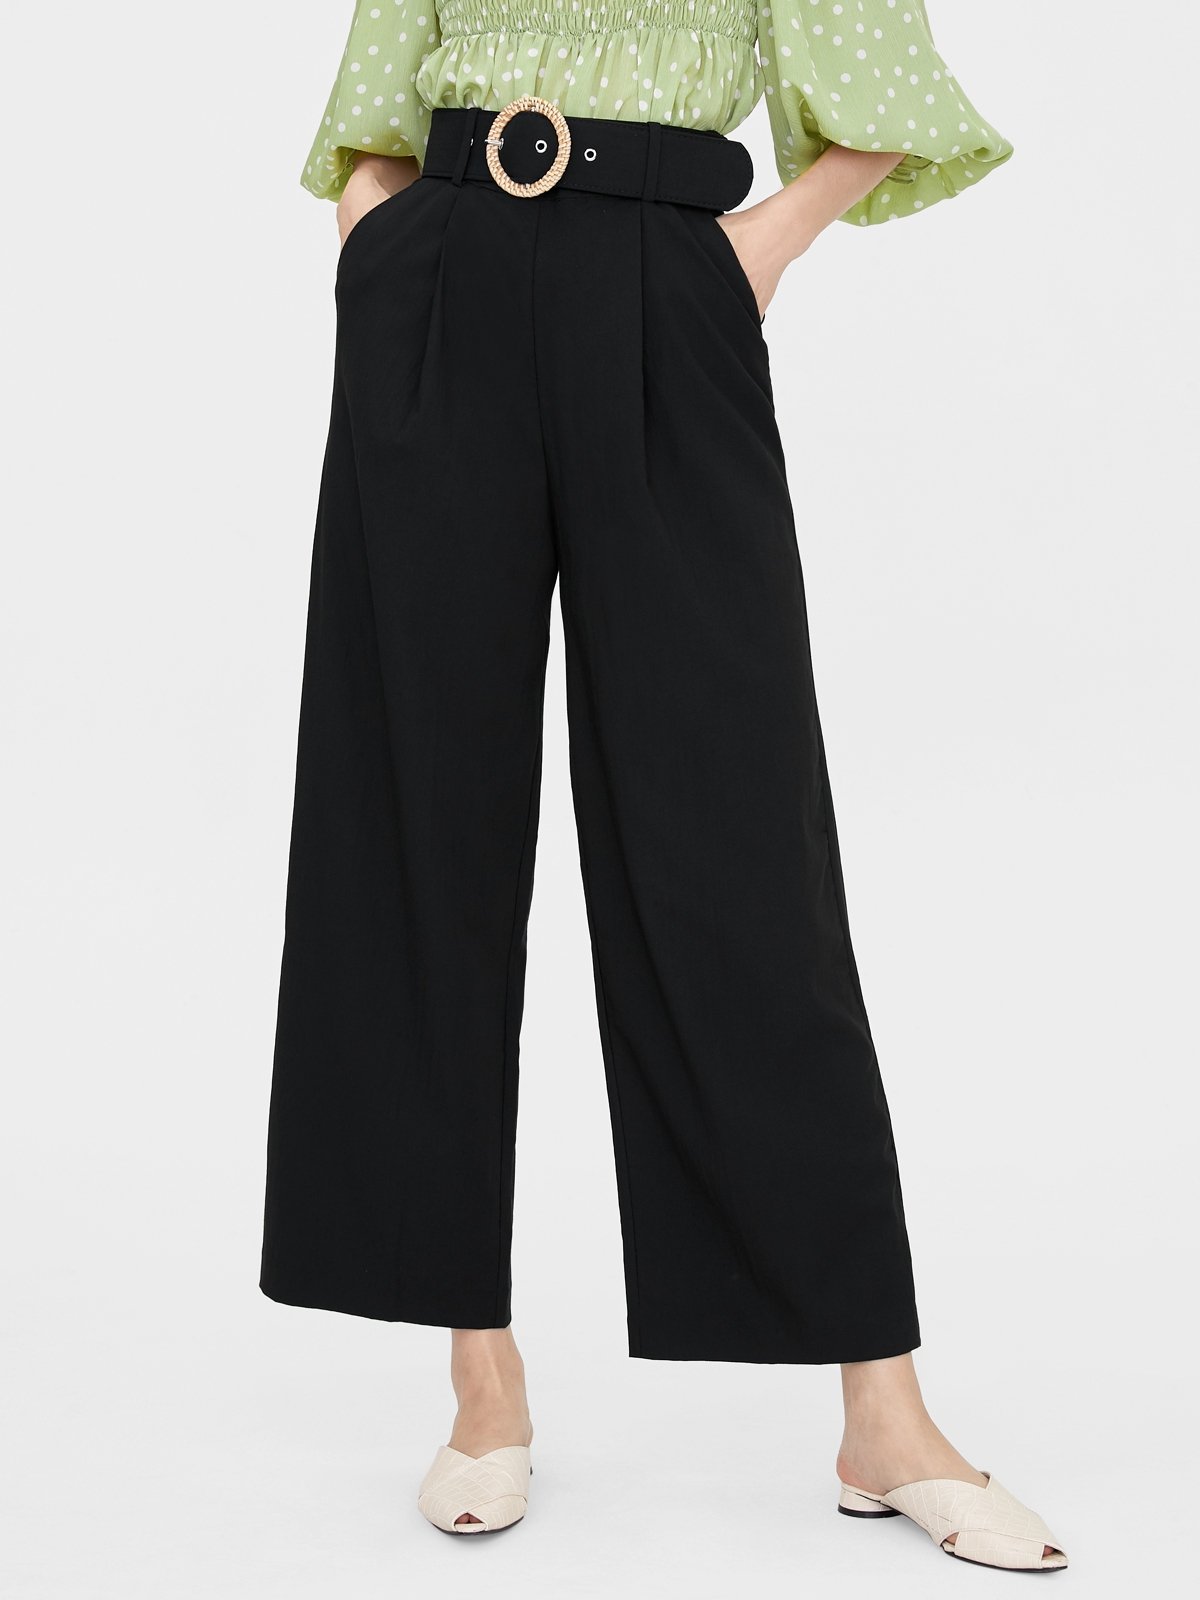 Woven Buckle Semi Pleated Pants - Black - Pomelo Fashion